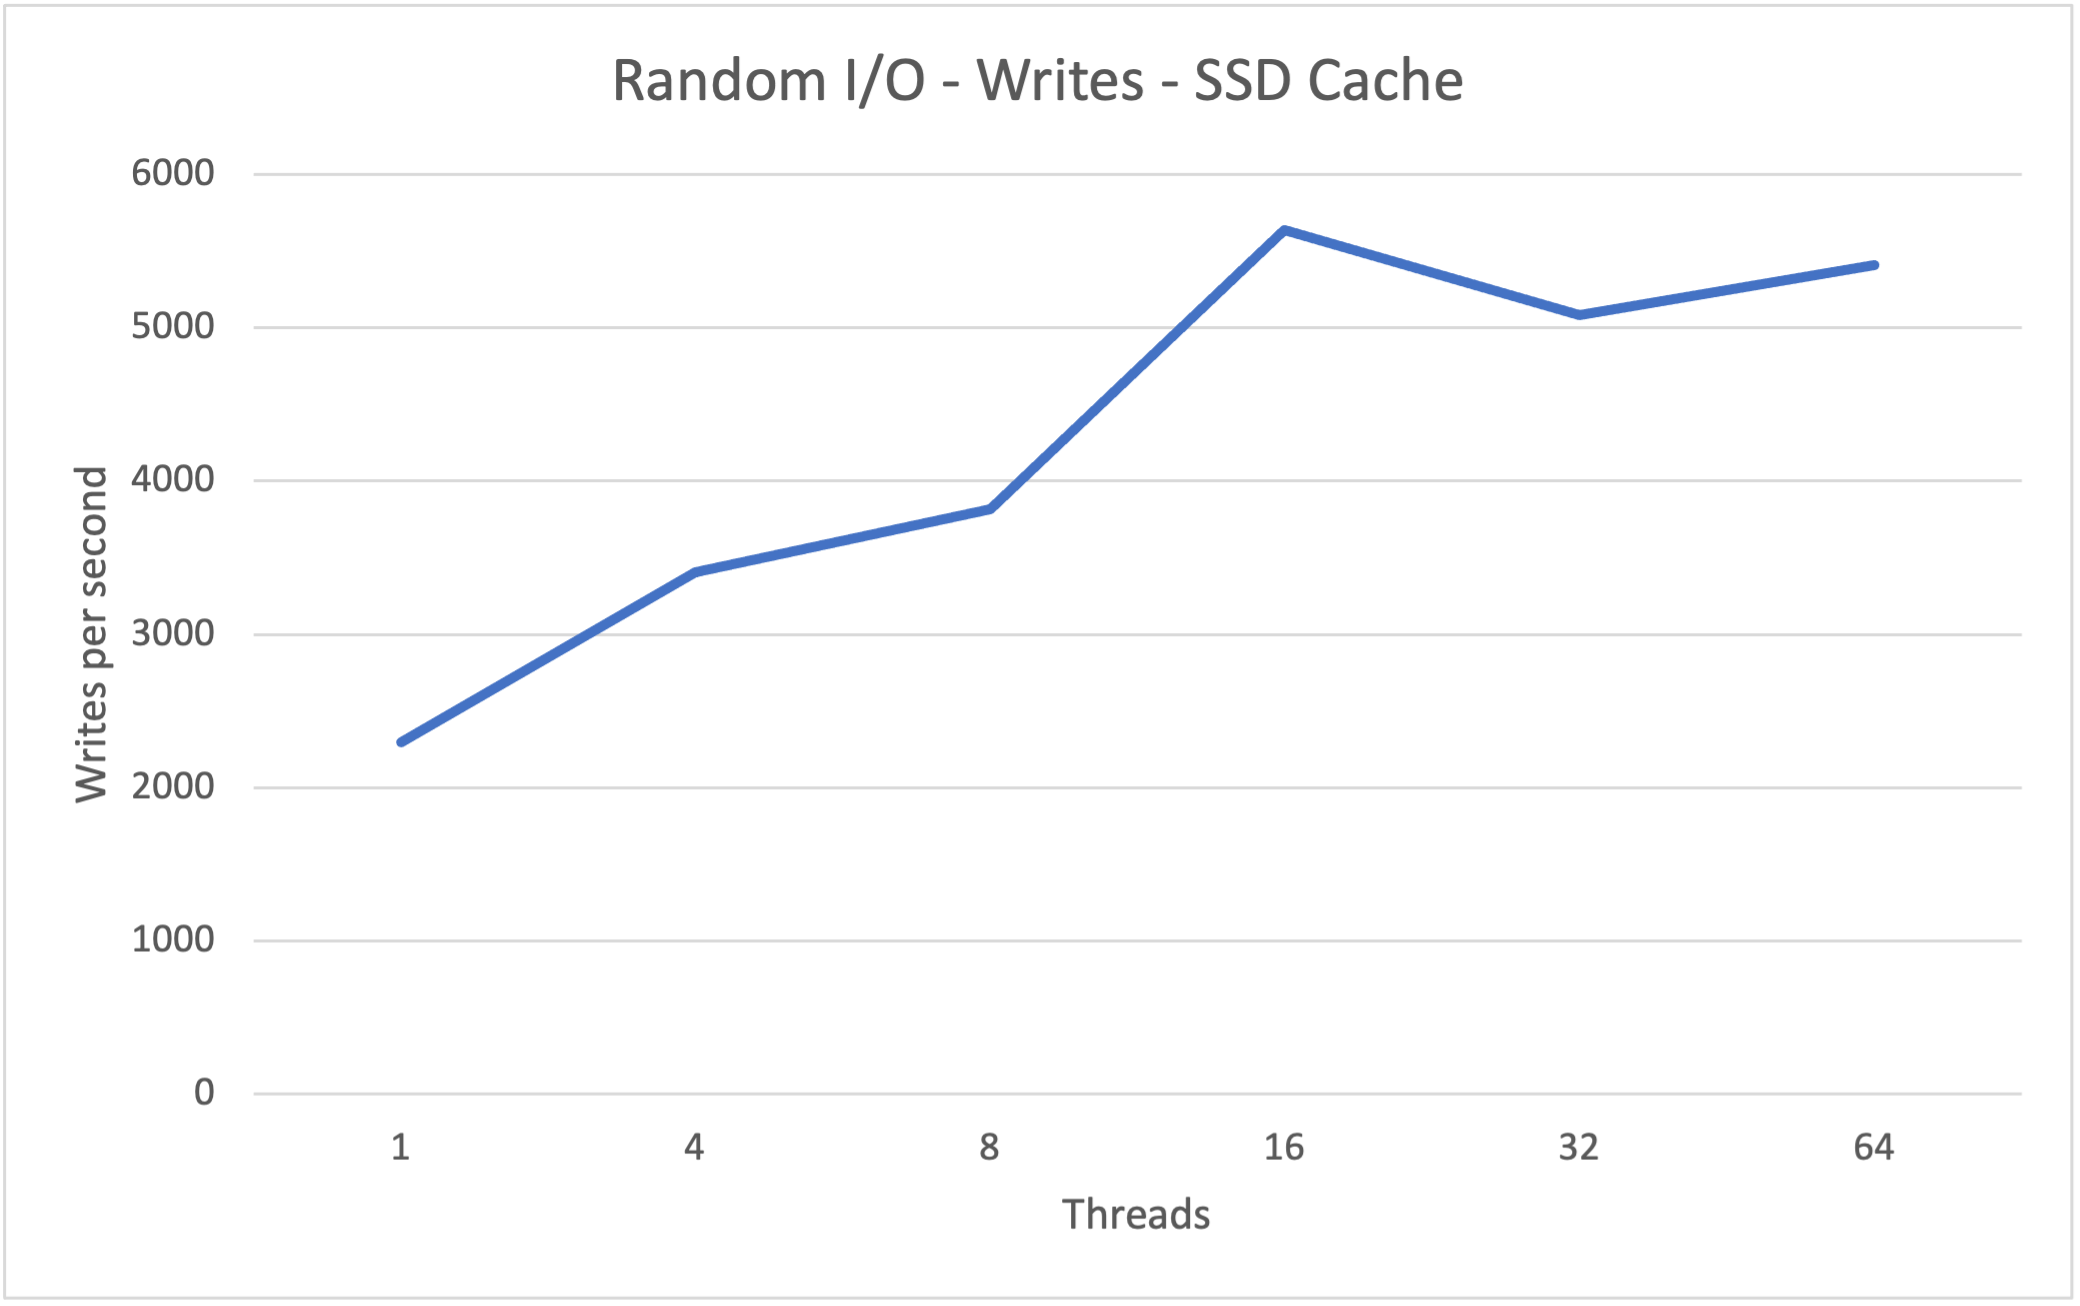 Sysbench - random writes to a Synology Hybrid Raid-1 hard disk volume - SSD cache